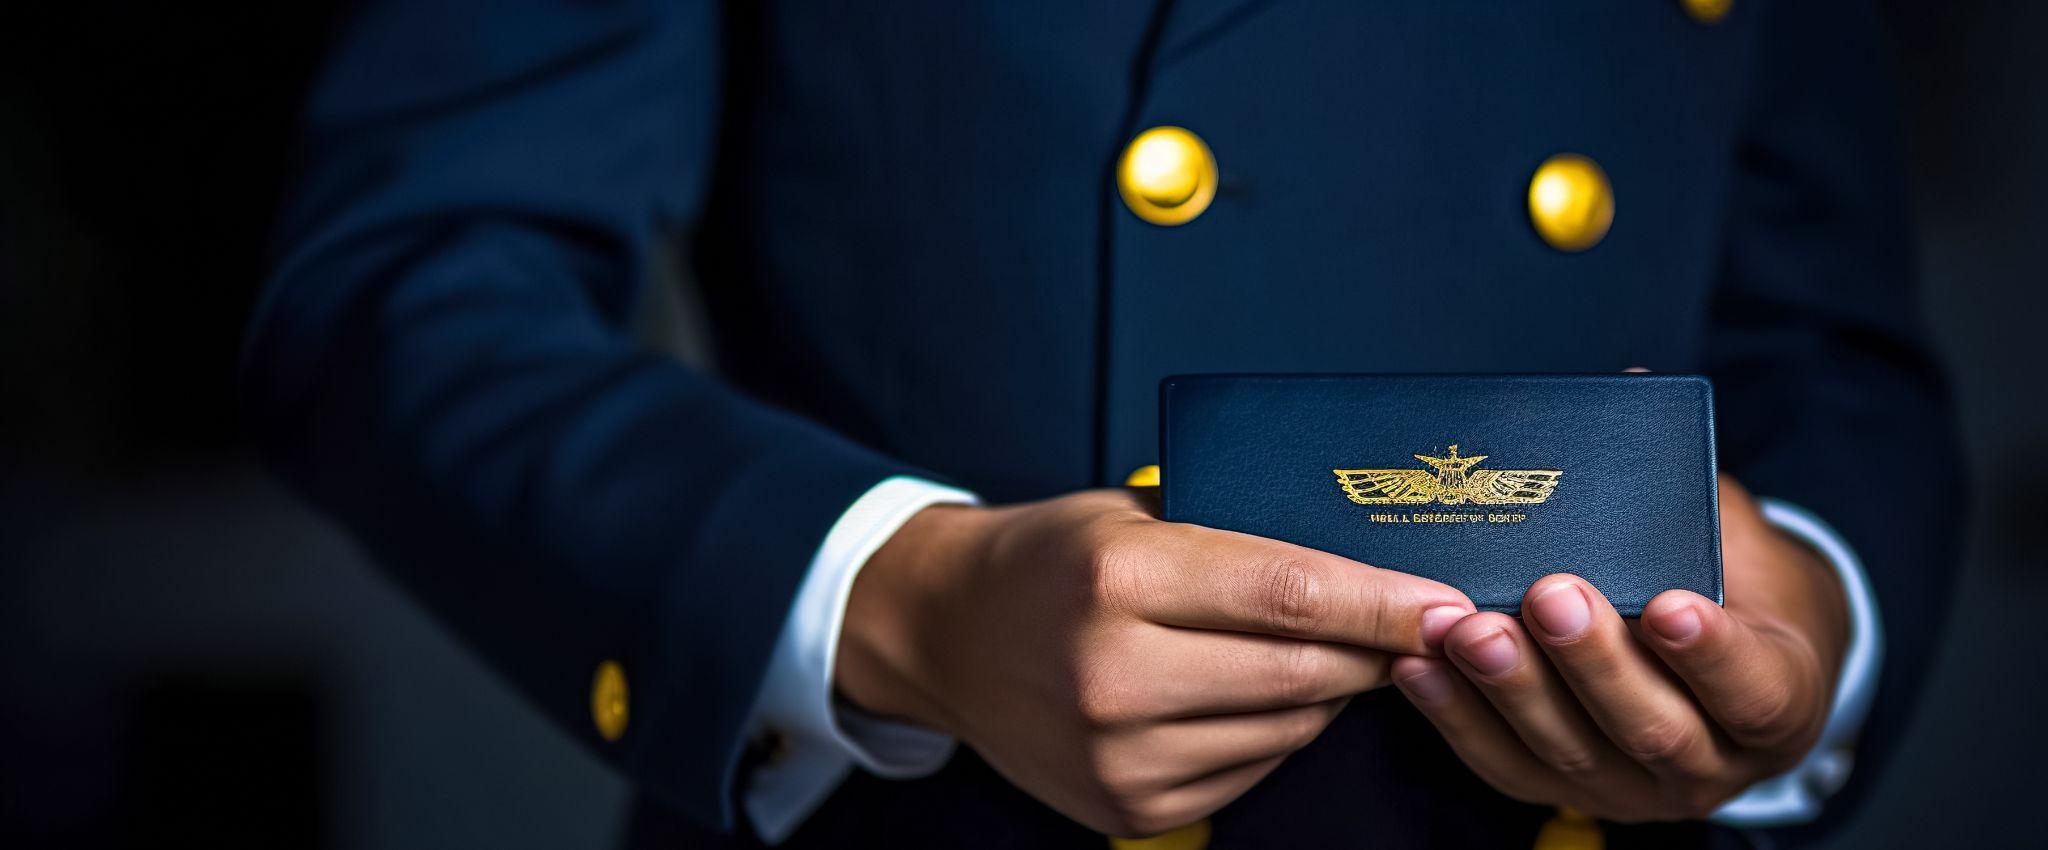 A pilot in uniform and a pilot's license in close-up.